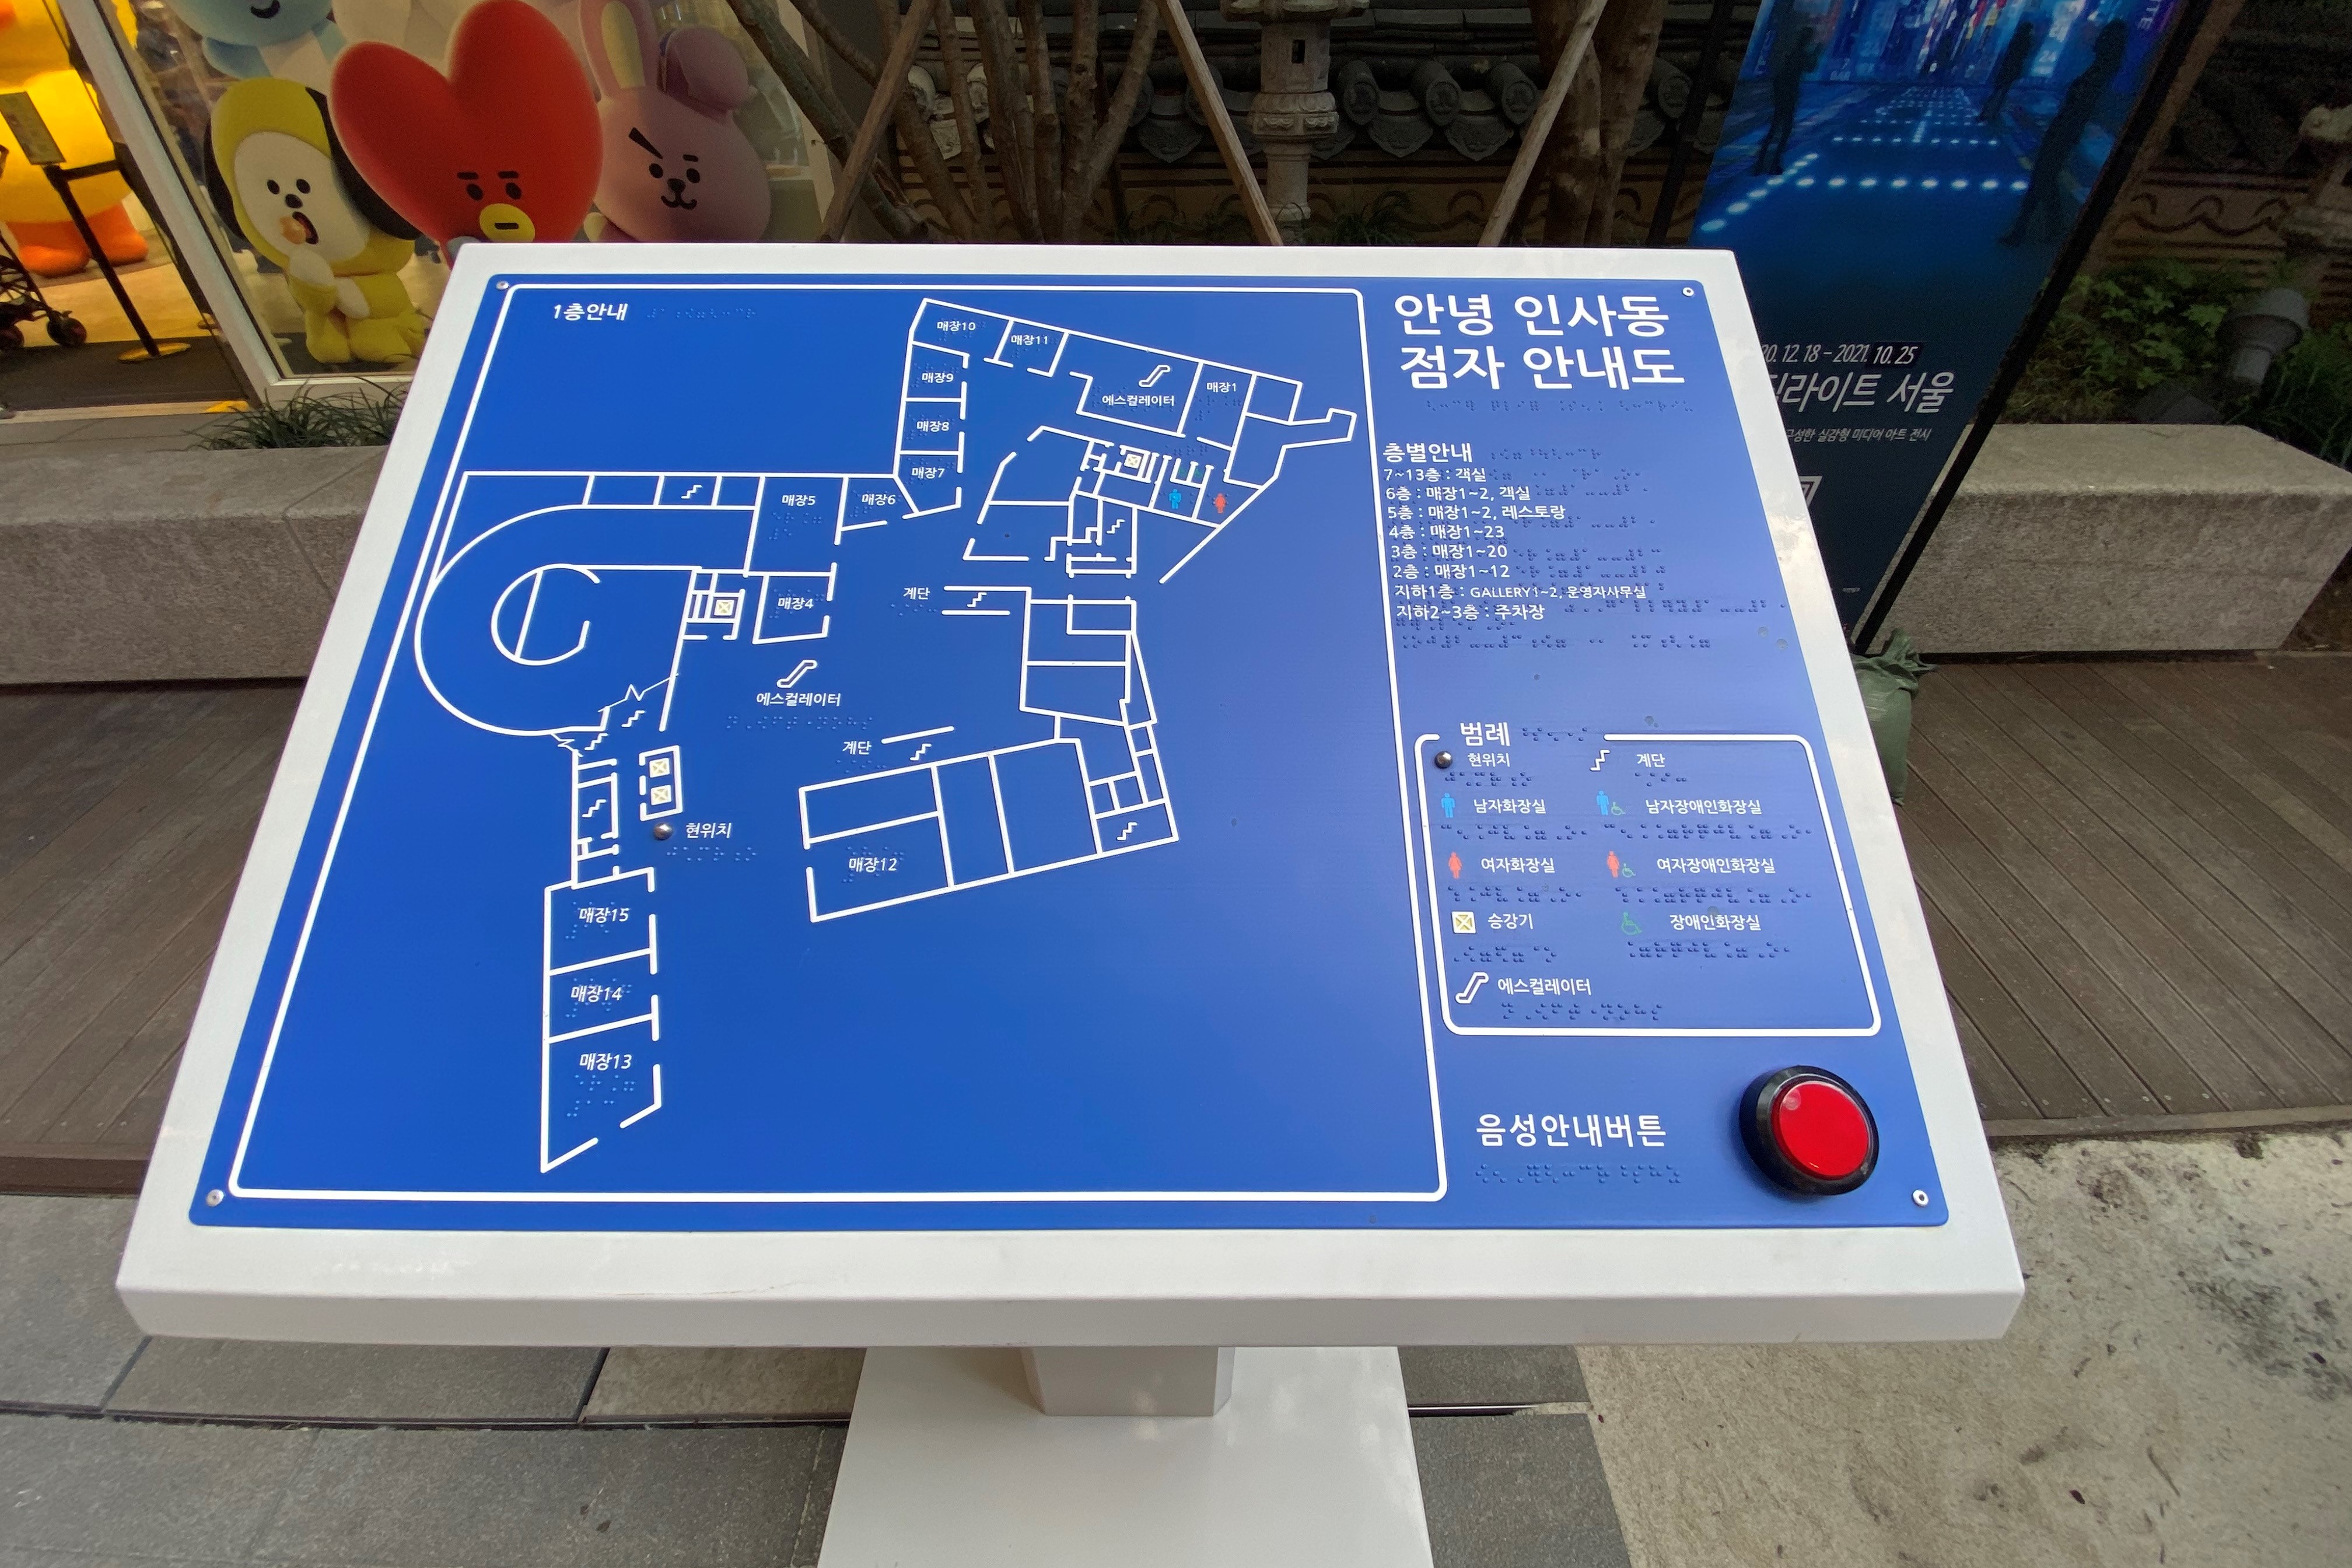 Information desk / Information board0 : Korean braille description board of Anoneng Insadong